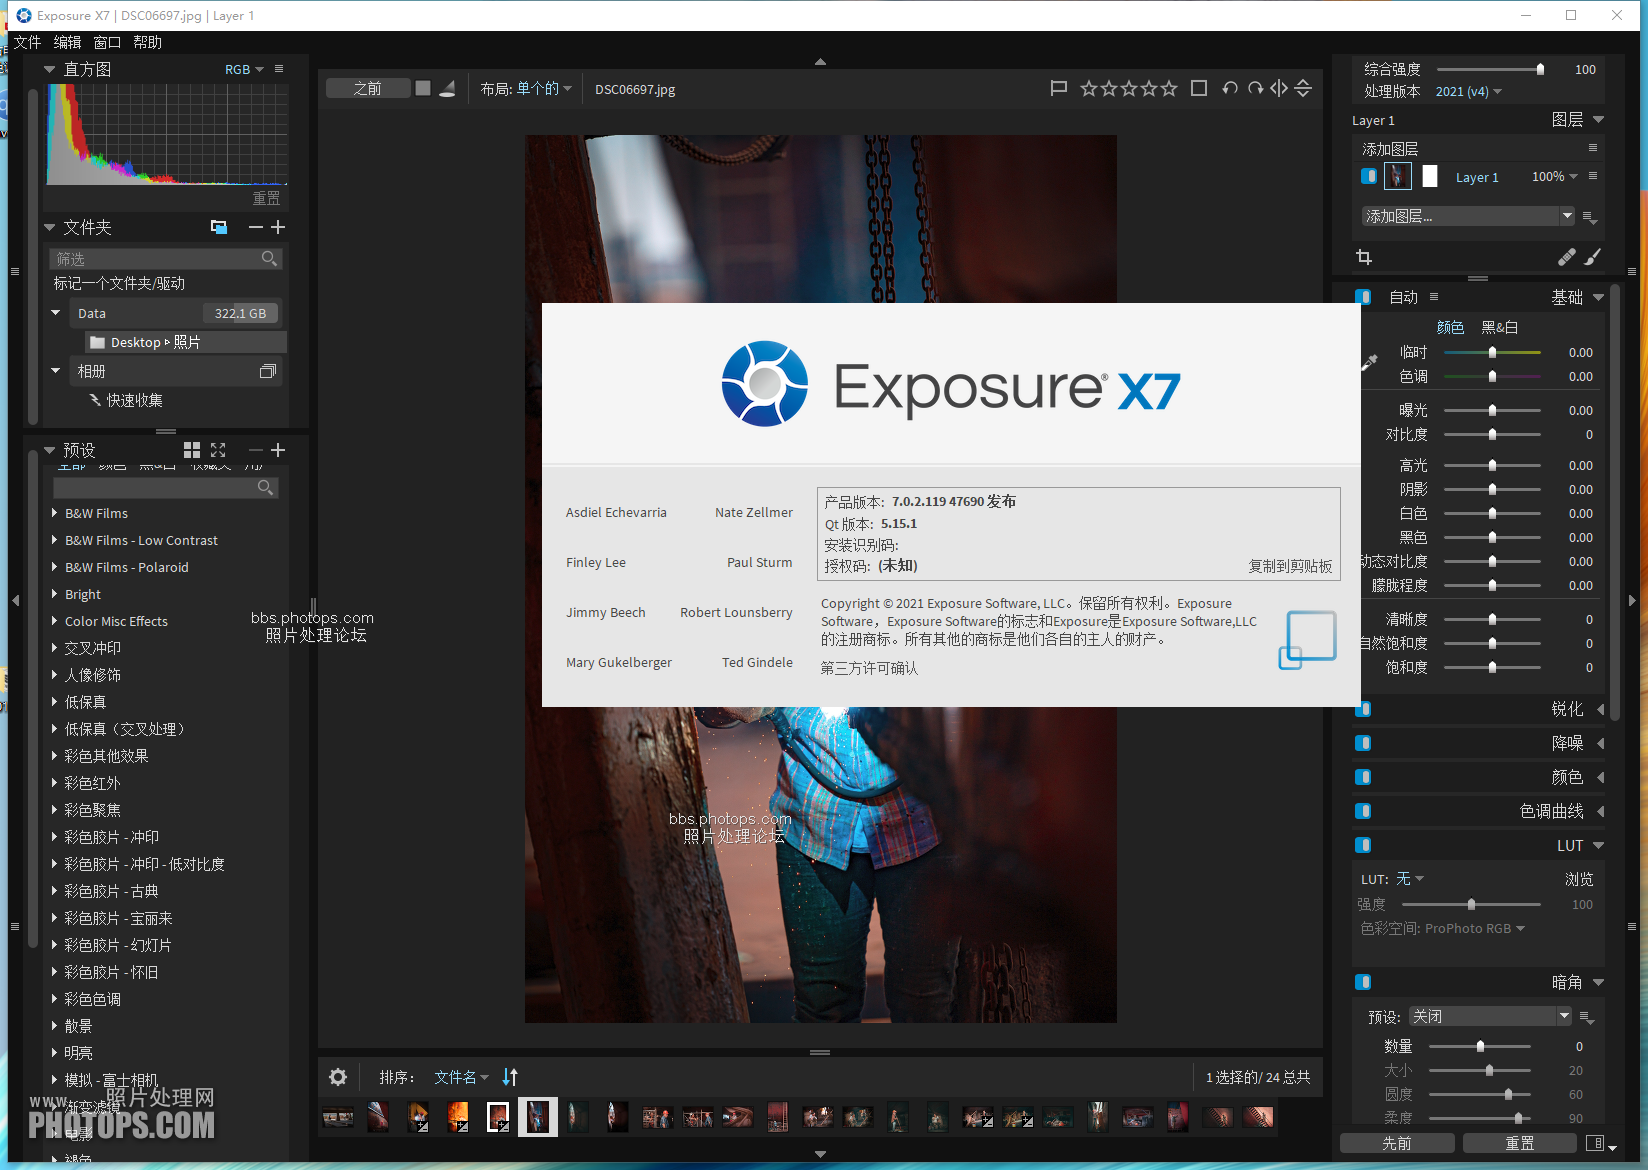 download the last version for apple Exposure X7 7.1.8.9 + Bundle